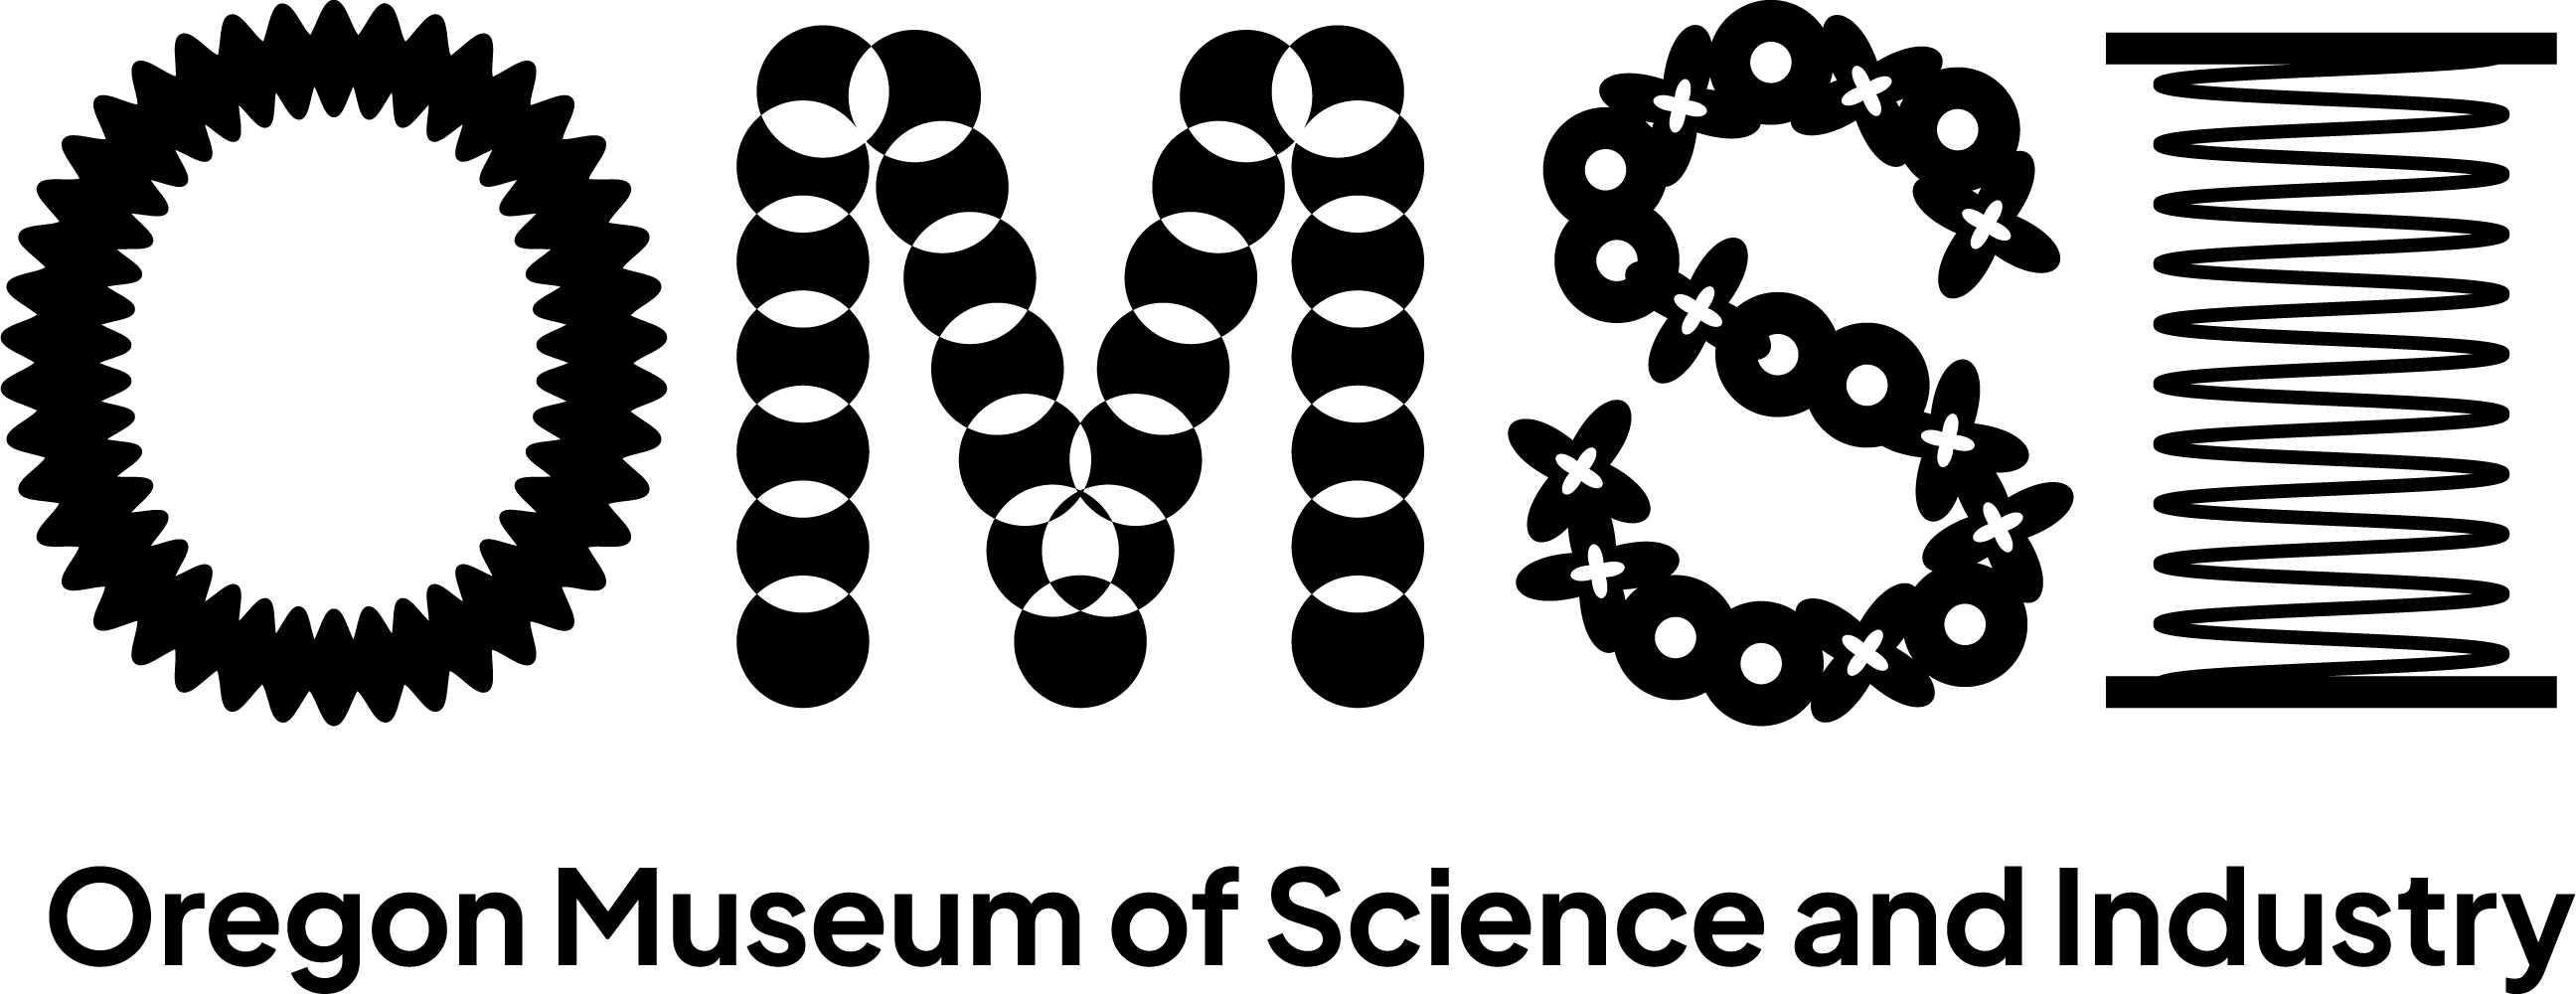 Oregon Museum of Science and Industry Volunteer Registration Form